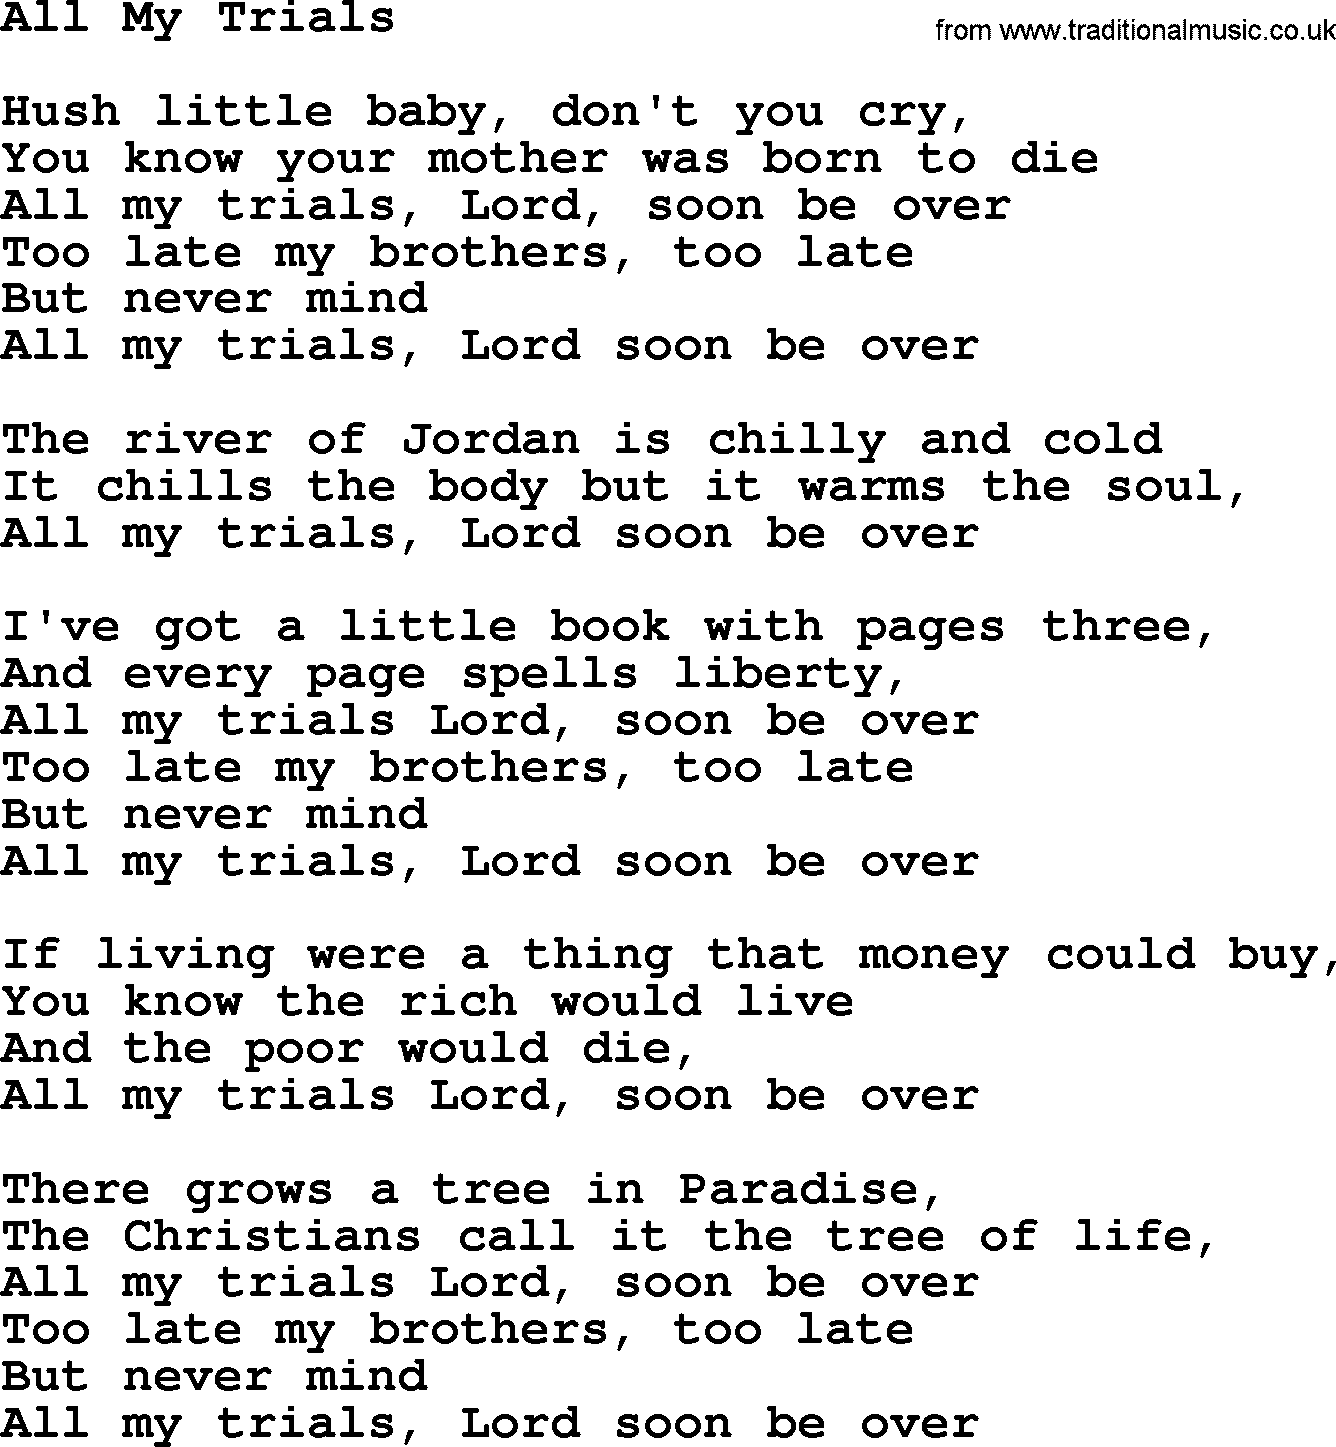 Joan Baez song All My Trials, lyrics